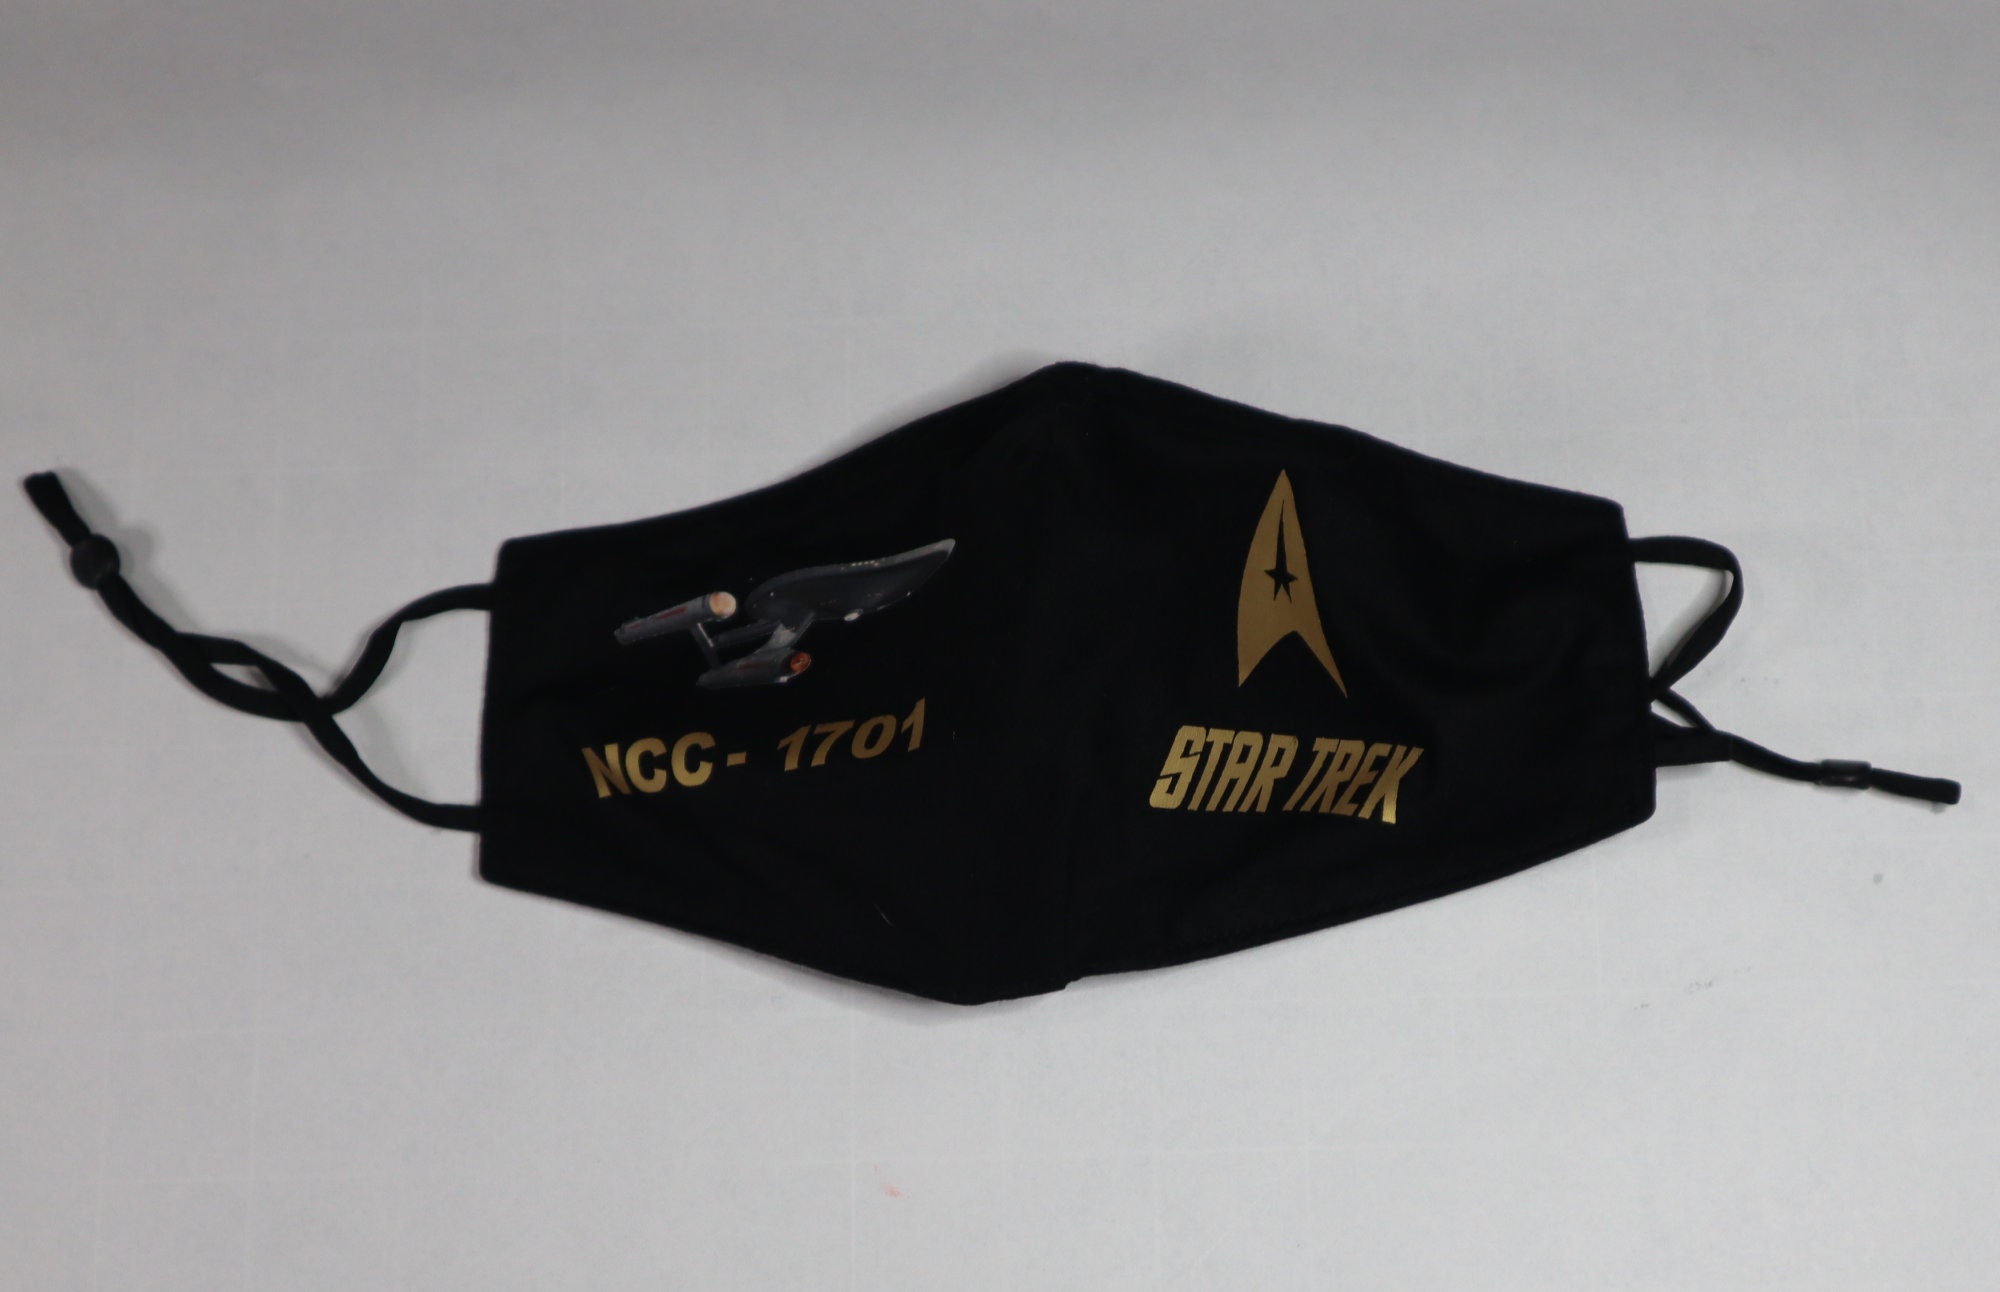 Handmade Cotton Blend Customizable Face Masks With Adjustable Ear-Loops - Star Trek Enterprise Ncc 1701